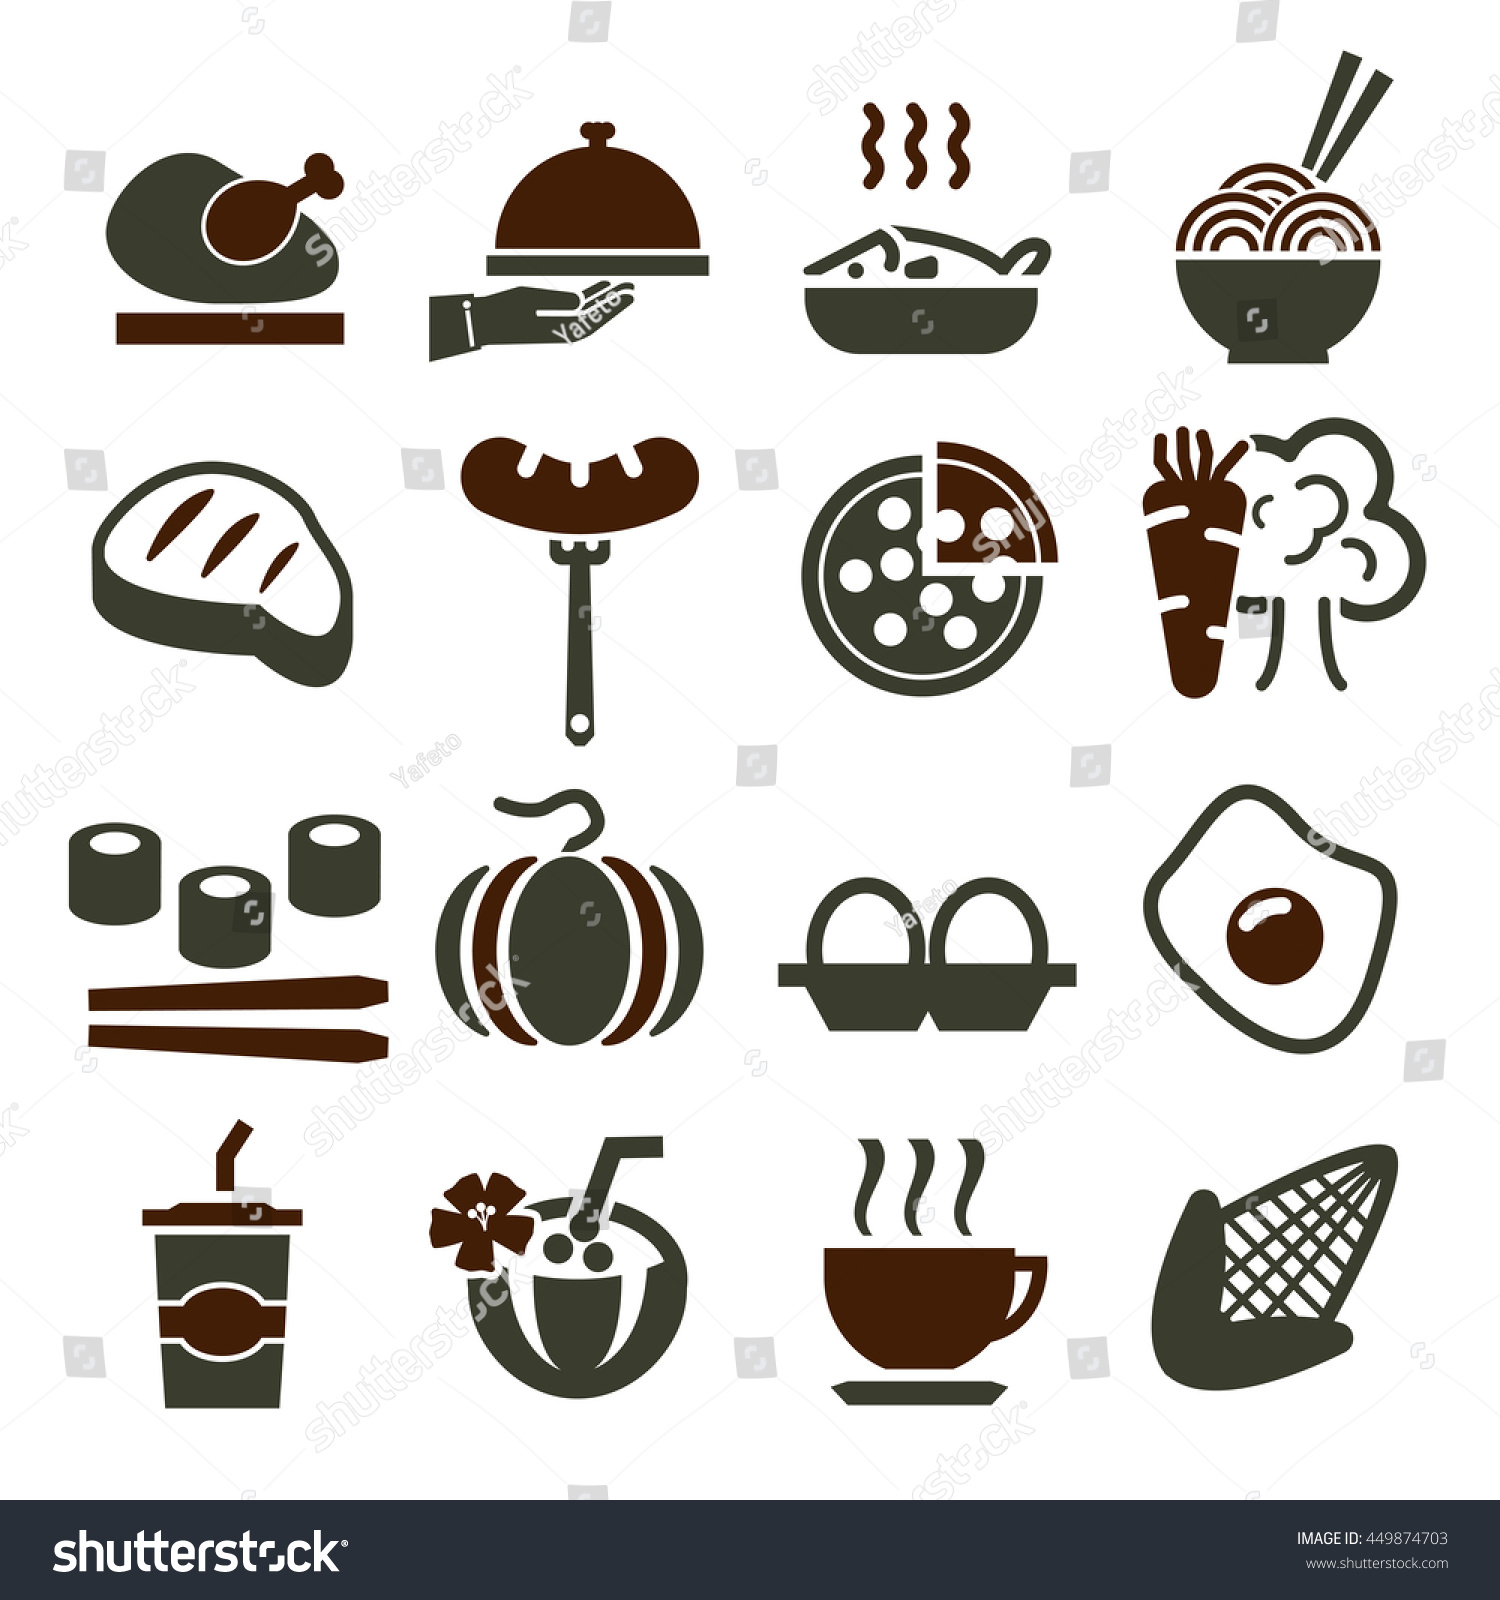 Food Icon Set Stock Vector Illustration 449874703 : Shutterstock